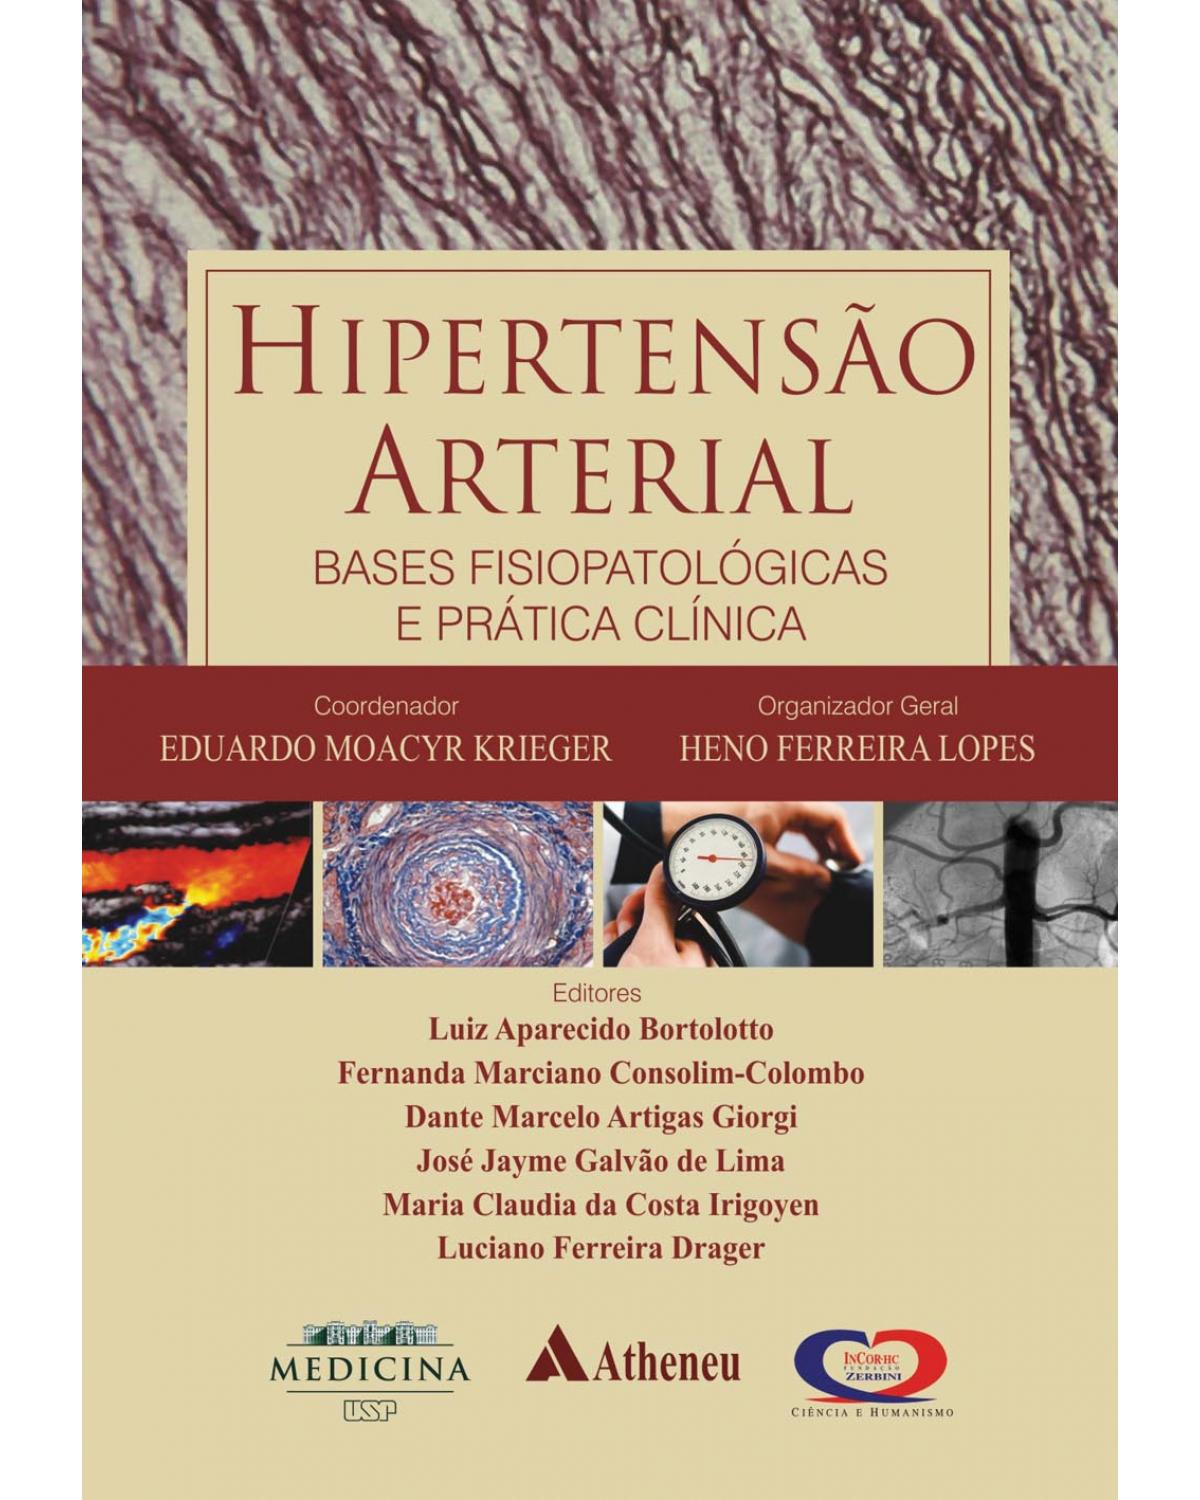 Hipertensão arterial - bases fisiopatológicas e prática clínica - 1ª Edição | 2013